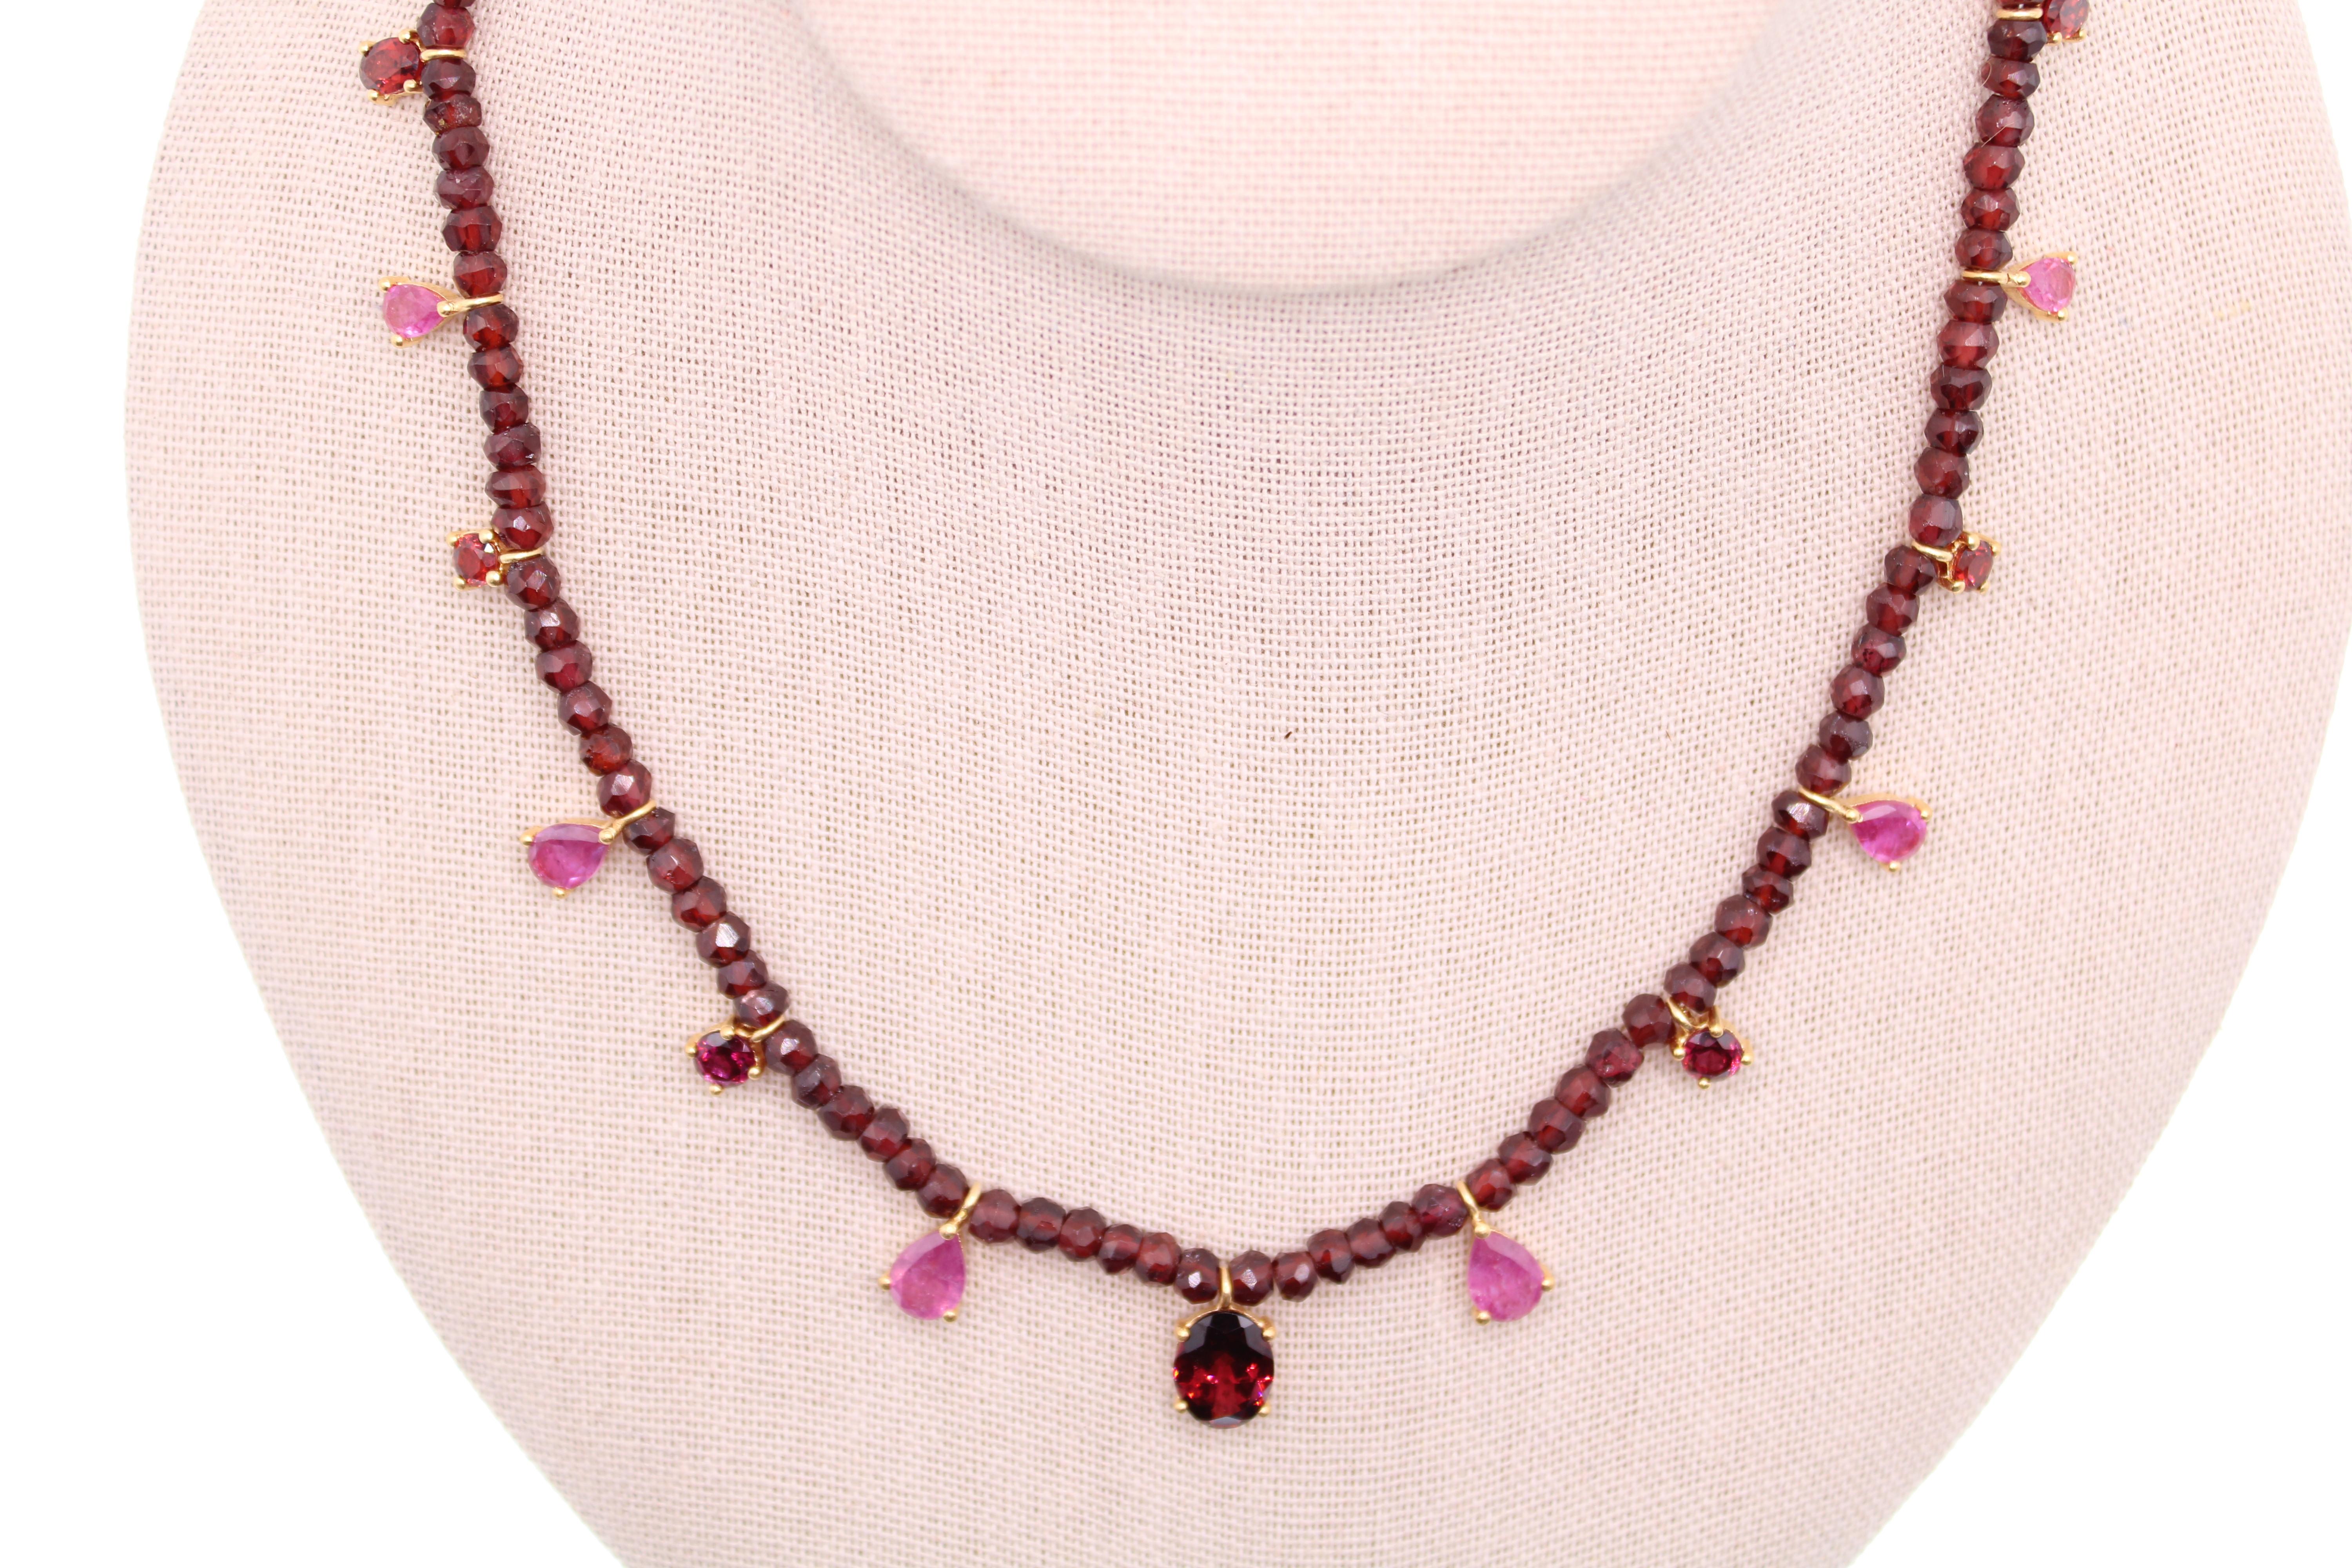 Oval Cut 11.17 Carat Ruby and Garnet Gemstone Beaded Necklace 